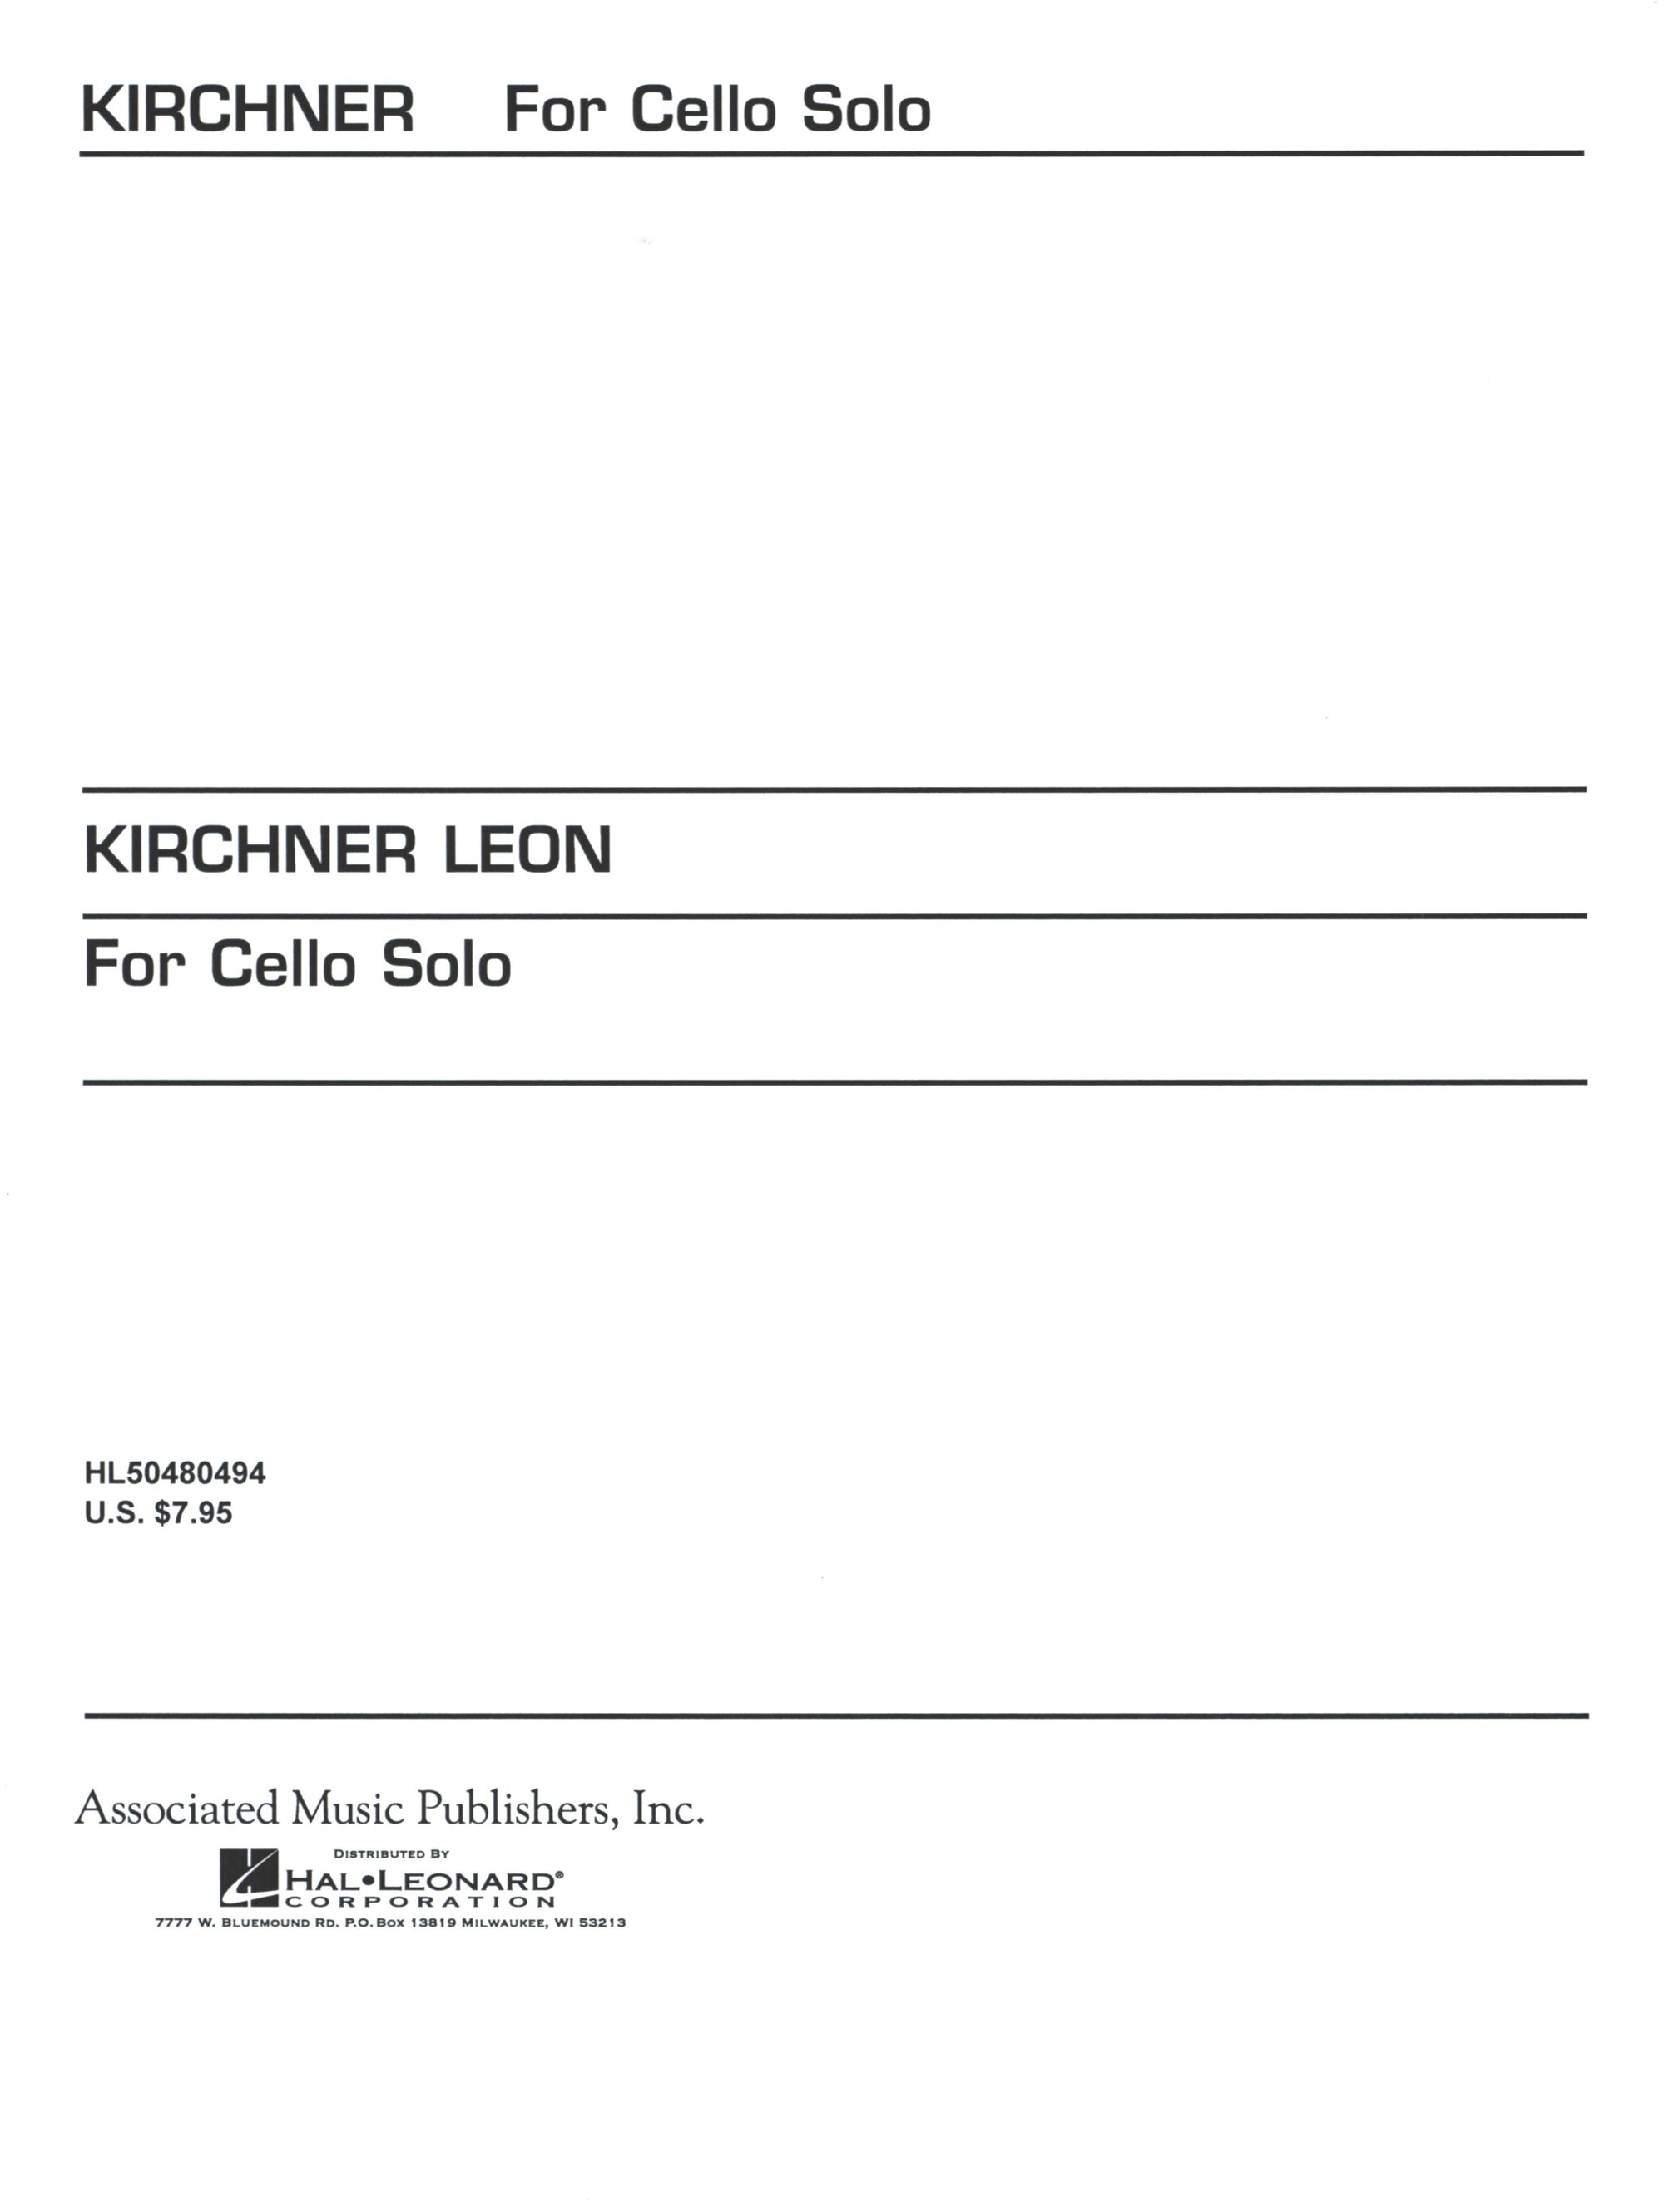 L. Kirchner: For Cello Solo